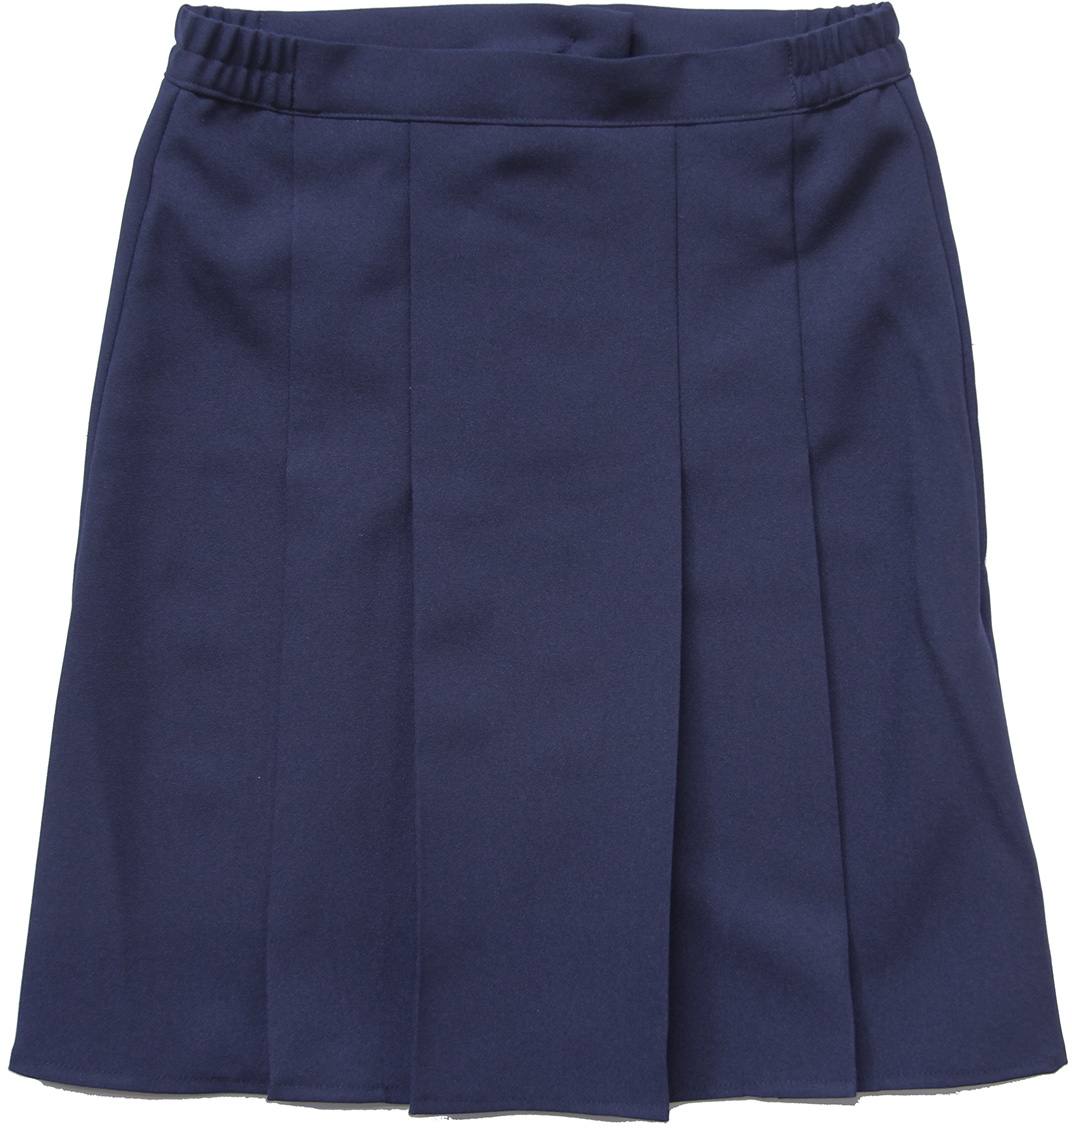 Partiotuote Scout skirt women’s sizes Blue 48